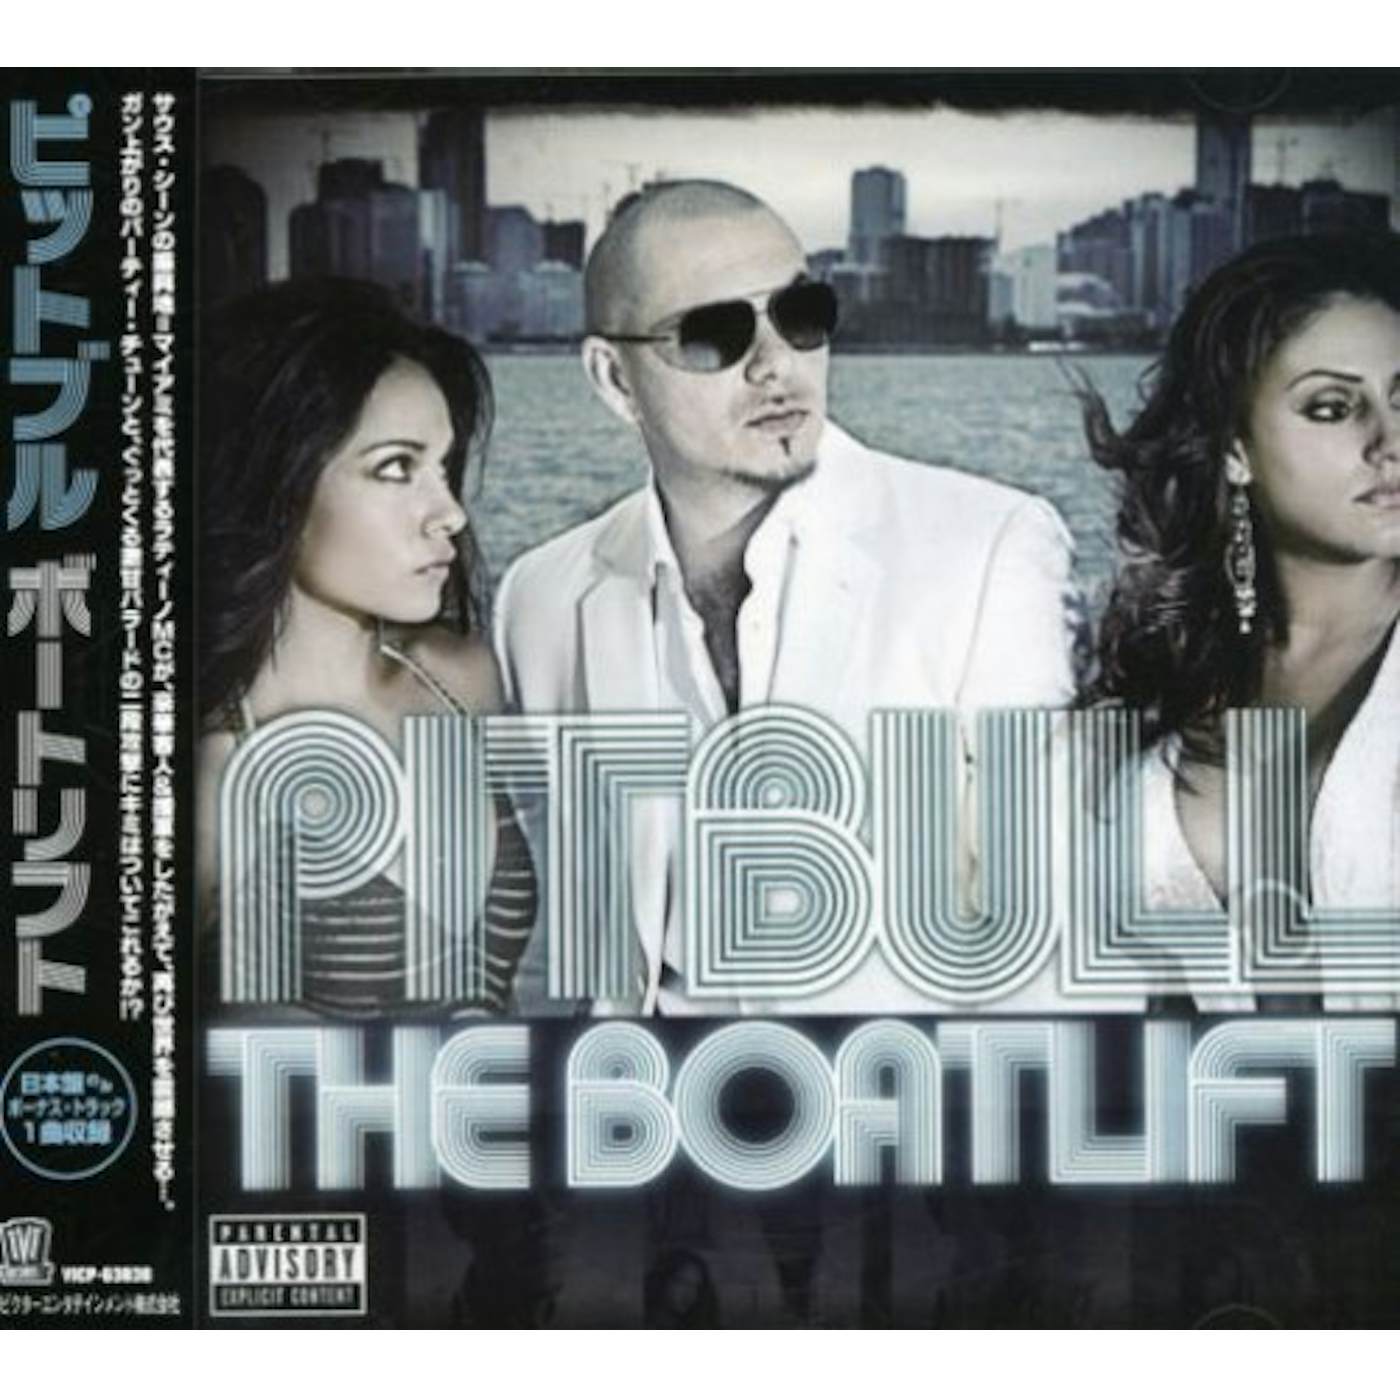 Pitbull BOAT LIFT CD